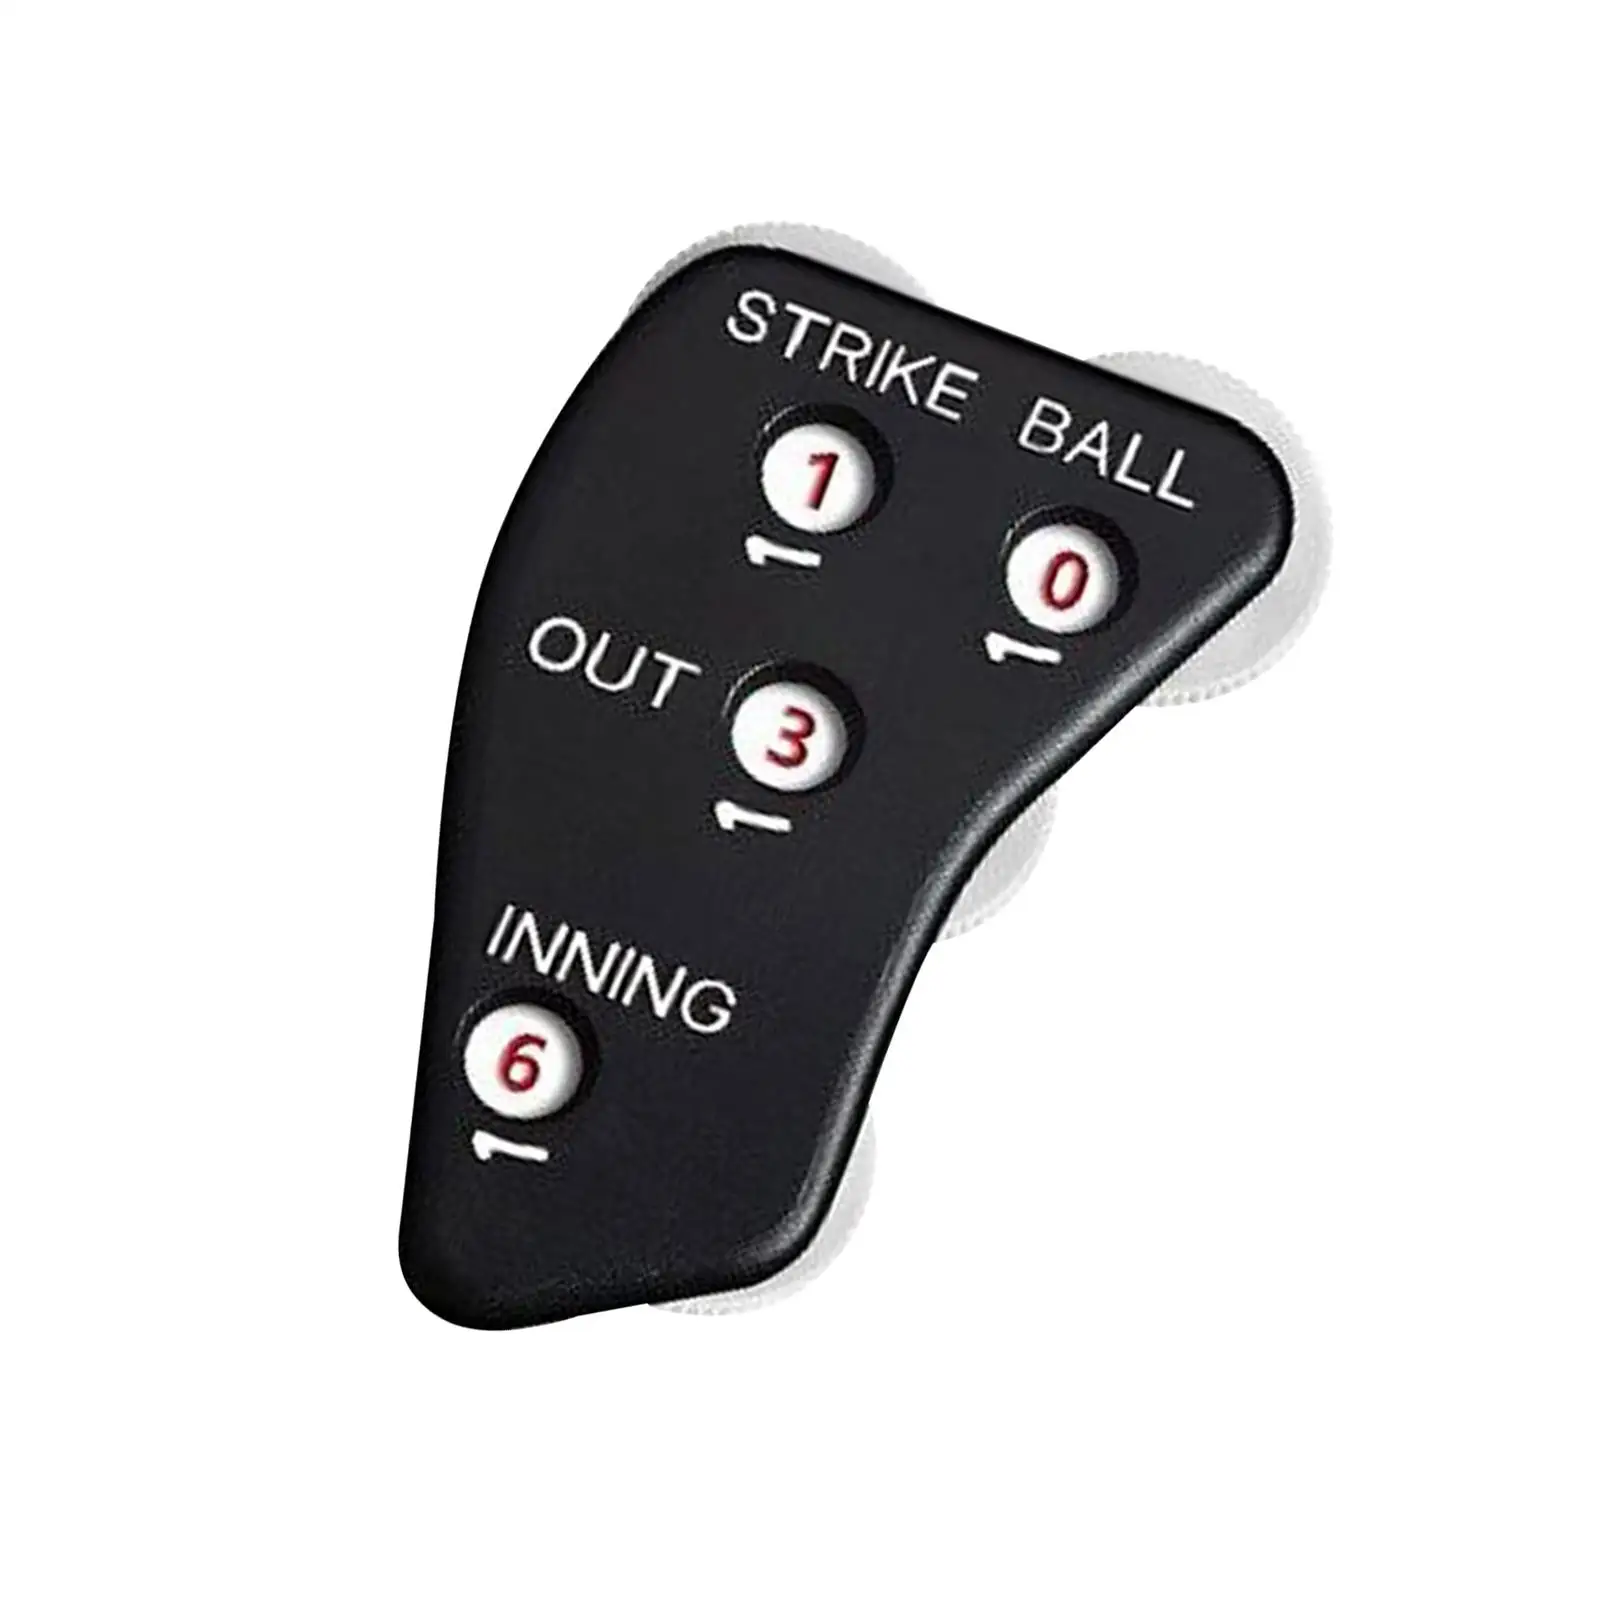 

Baseball Umpire , Baseball Umpire Equipment 8cmx6cm Score Counter Black Softball Umpire Gear Indicator for Ball Strike Pocket